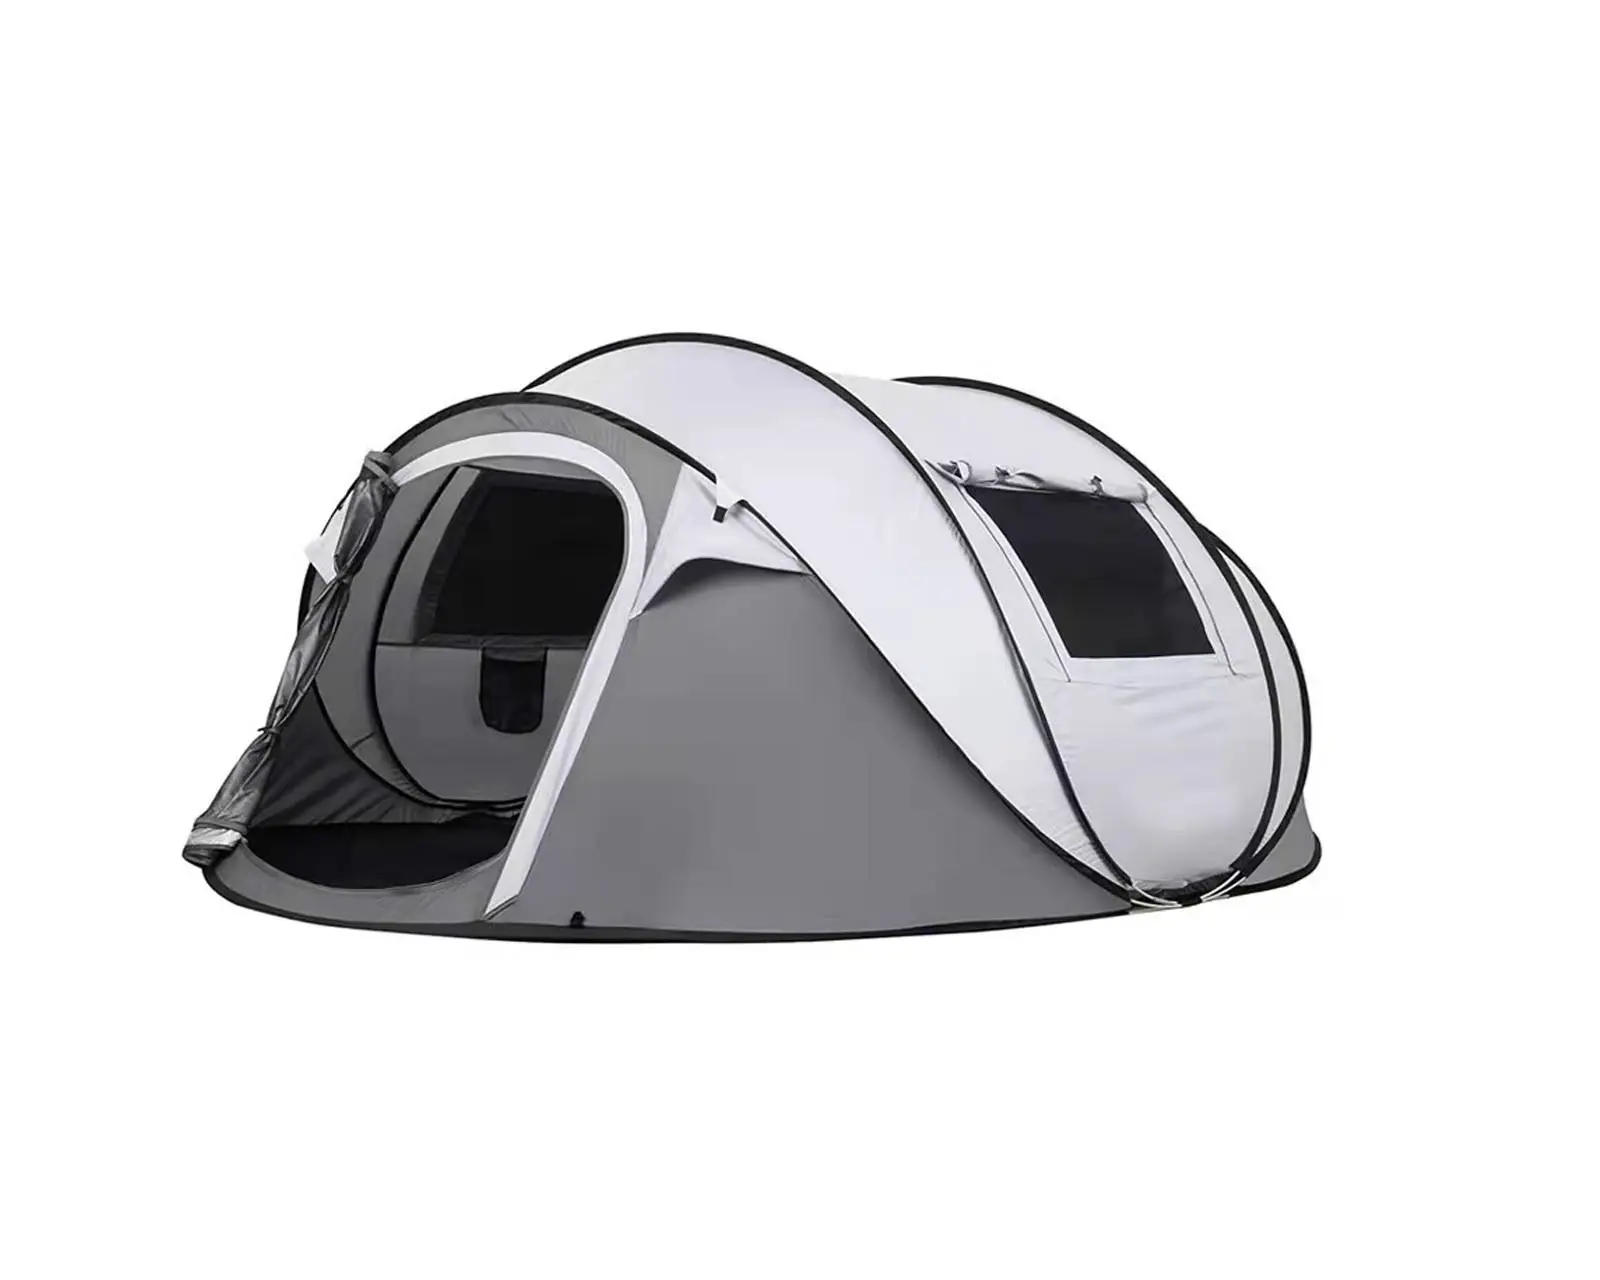 Tente portable en plein air famille ami tente de fête Camping installation facile instantanée